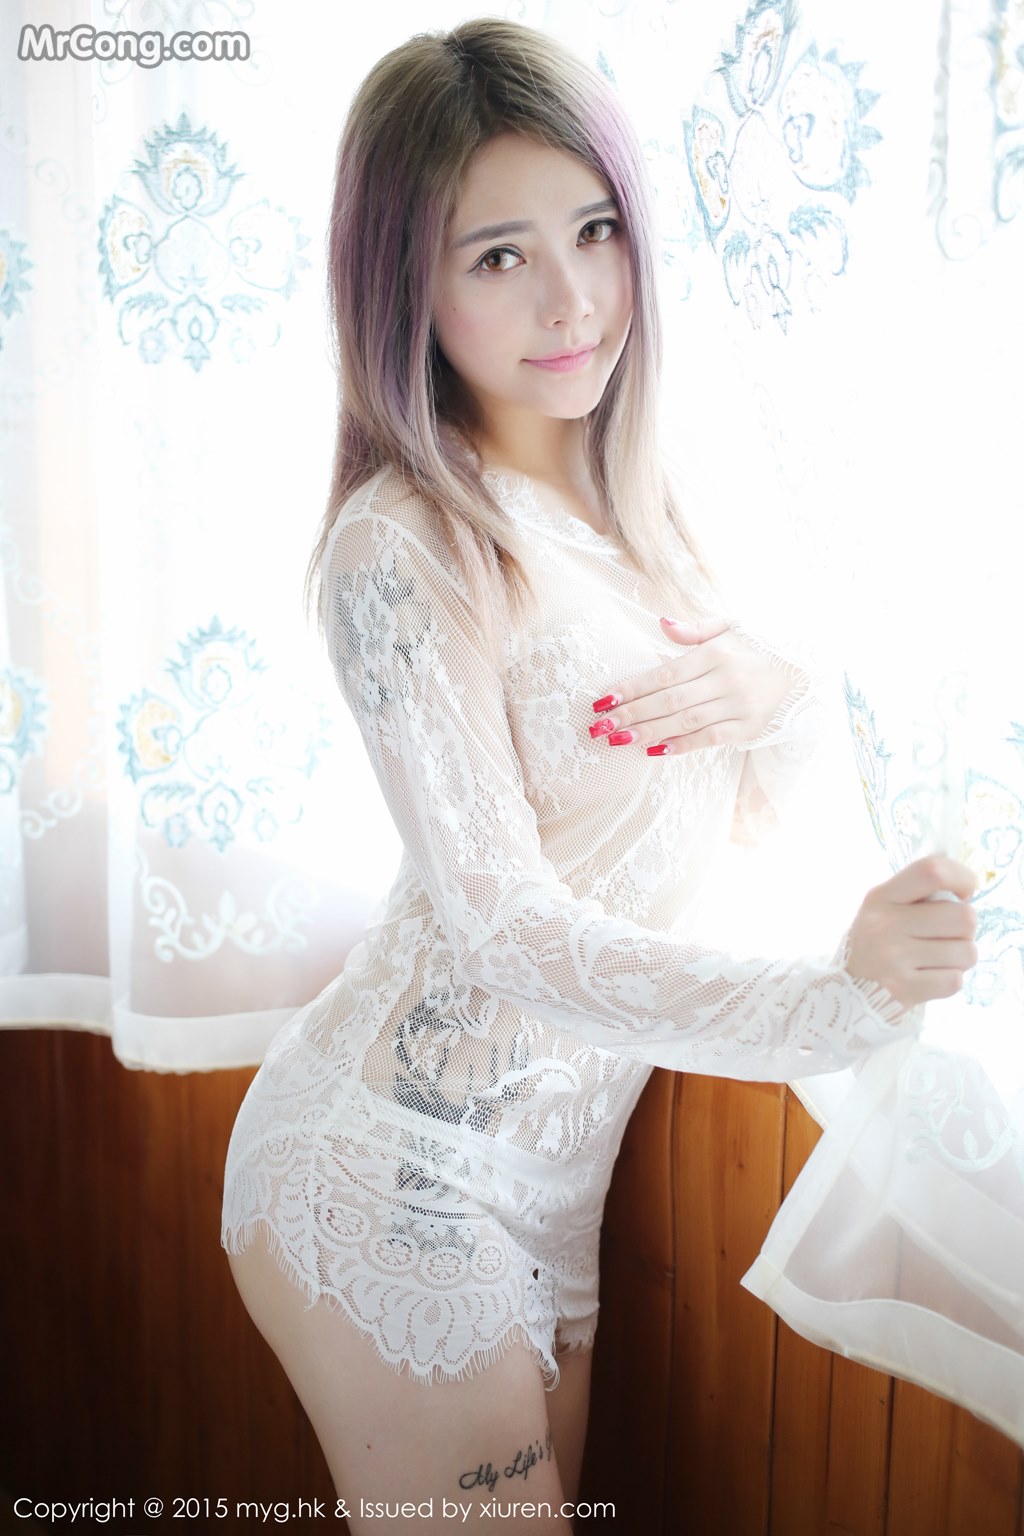 MyGirl Vol.127: Model Anna (李雪婷) (53 photos) photo 3-3